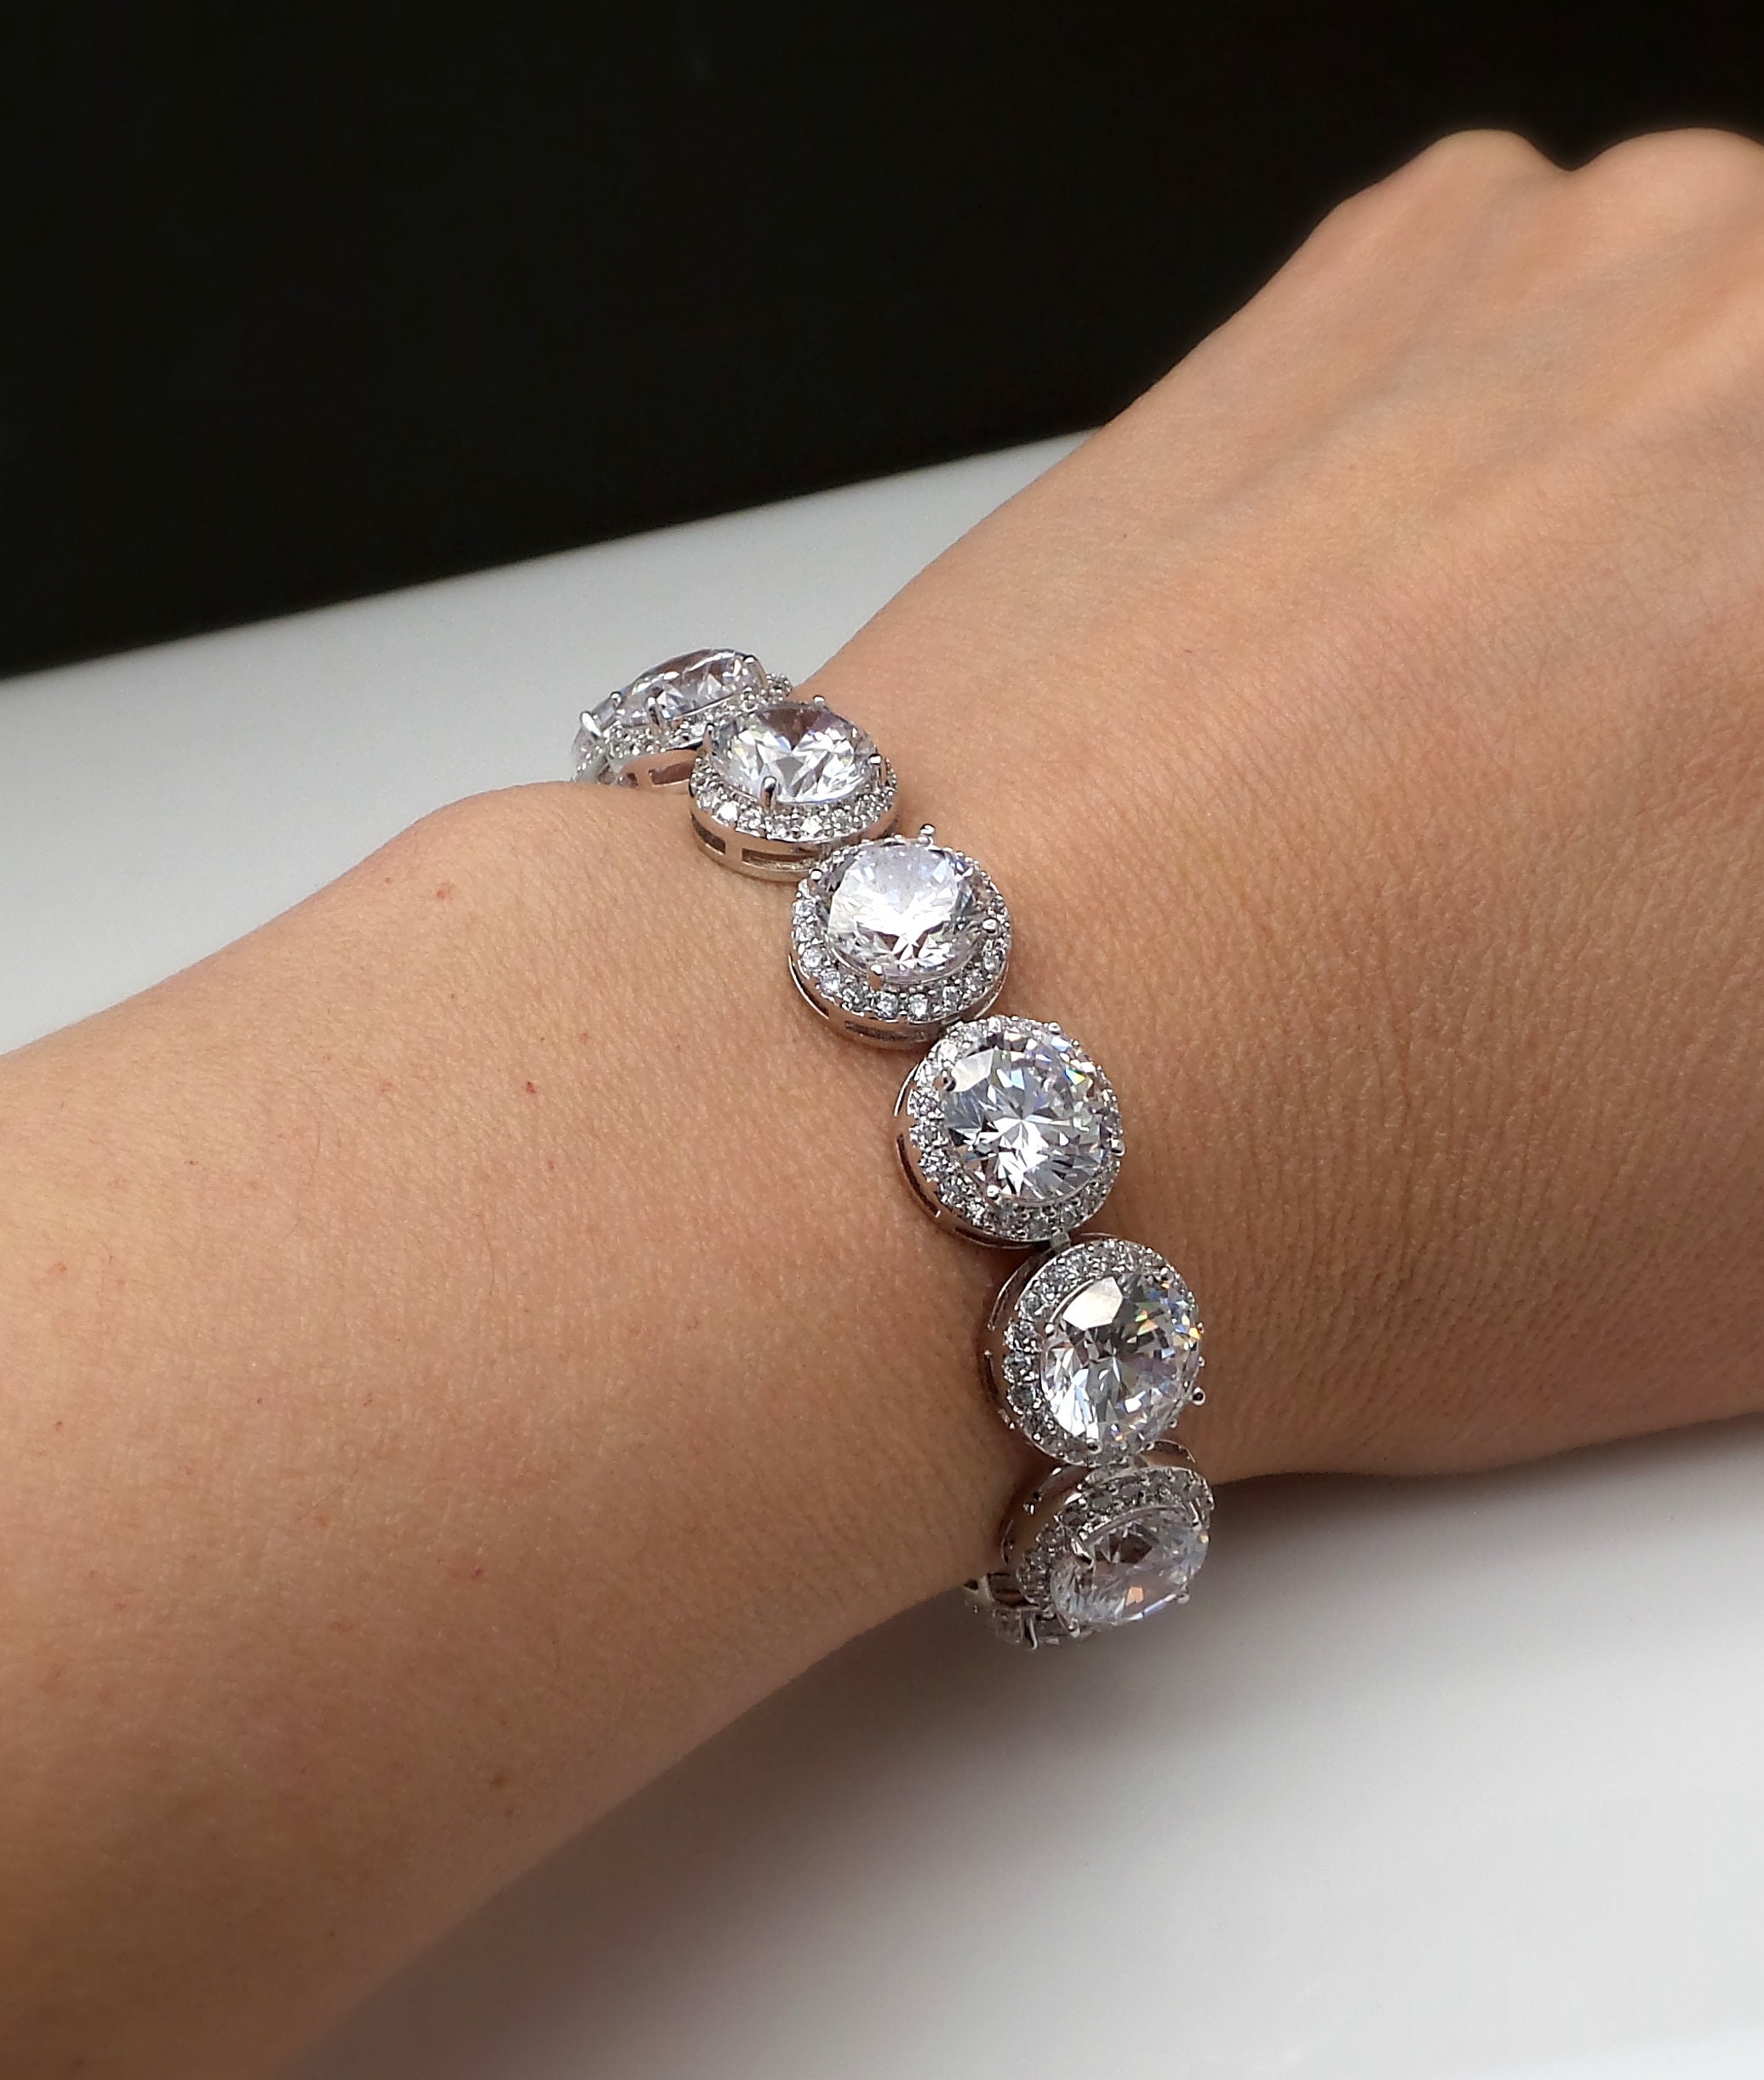 Bridal bracelet wedding jewelry prom party gift christmas | Etsy